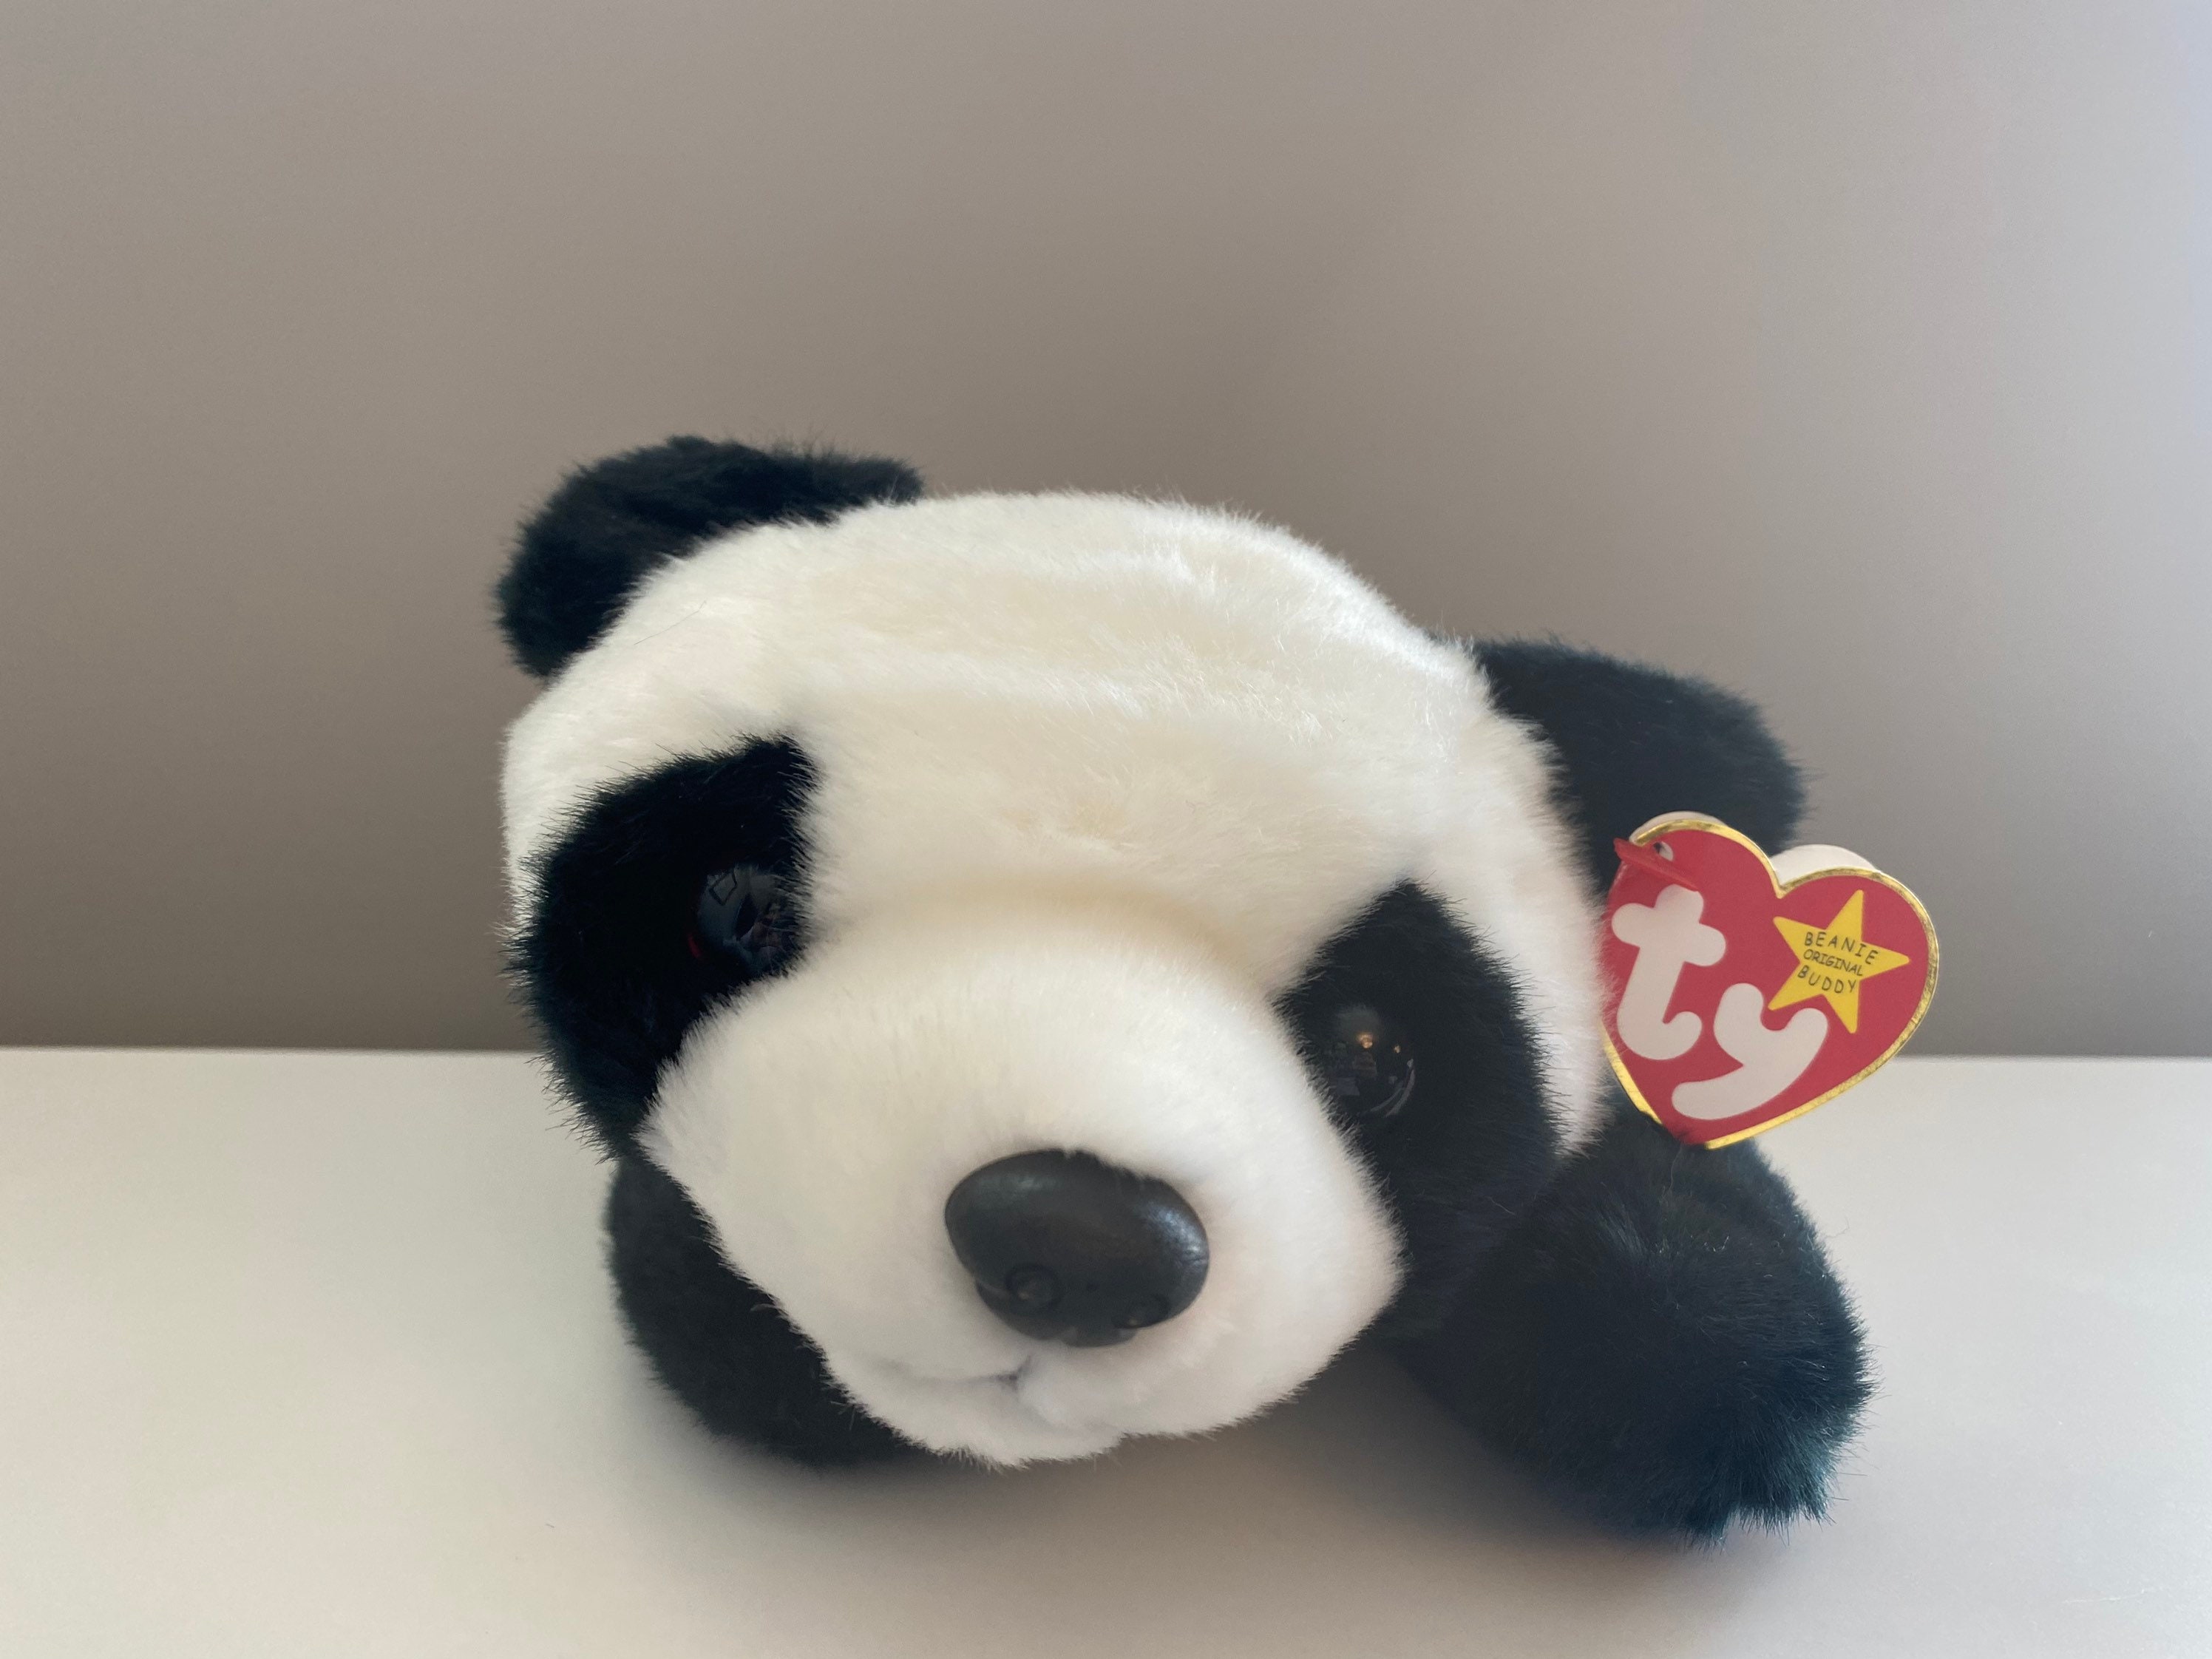 Panda buy lv beanie came its 1:1    : r/Pandabuy